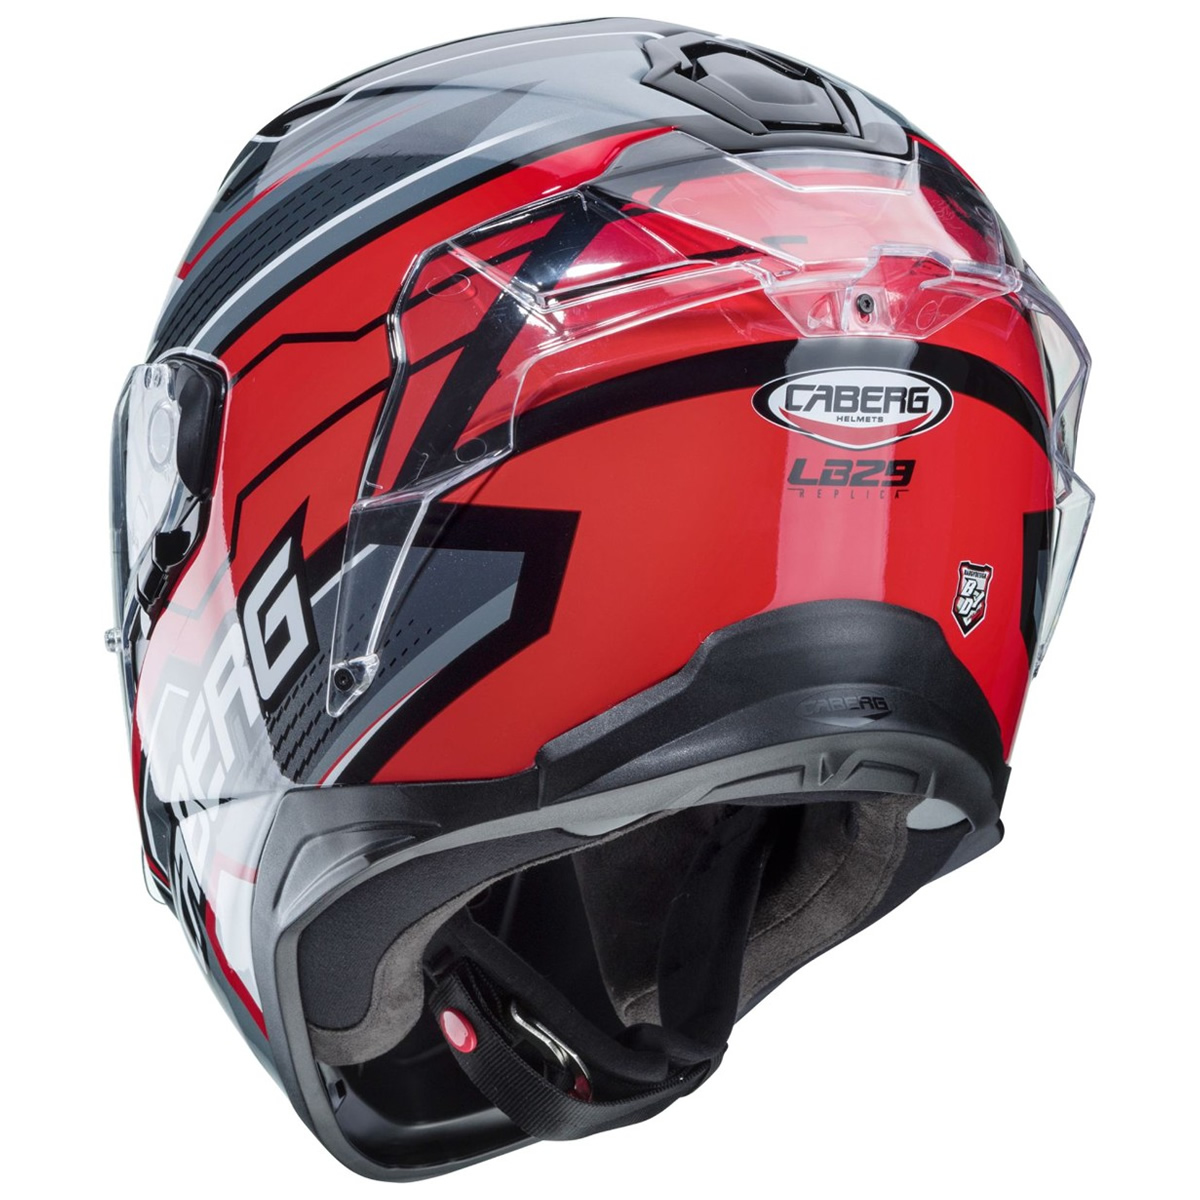 Caberg Drift Evo LB29 Helm, schwarz-anthrazit-rot